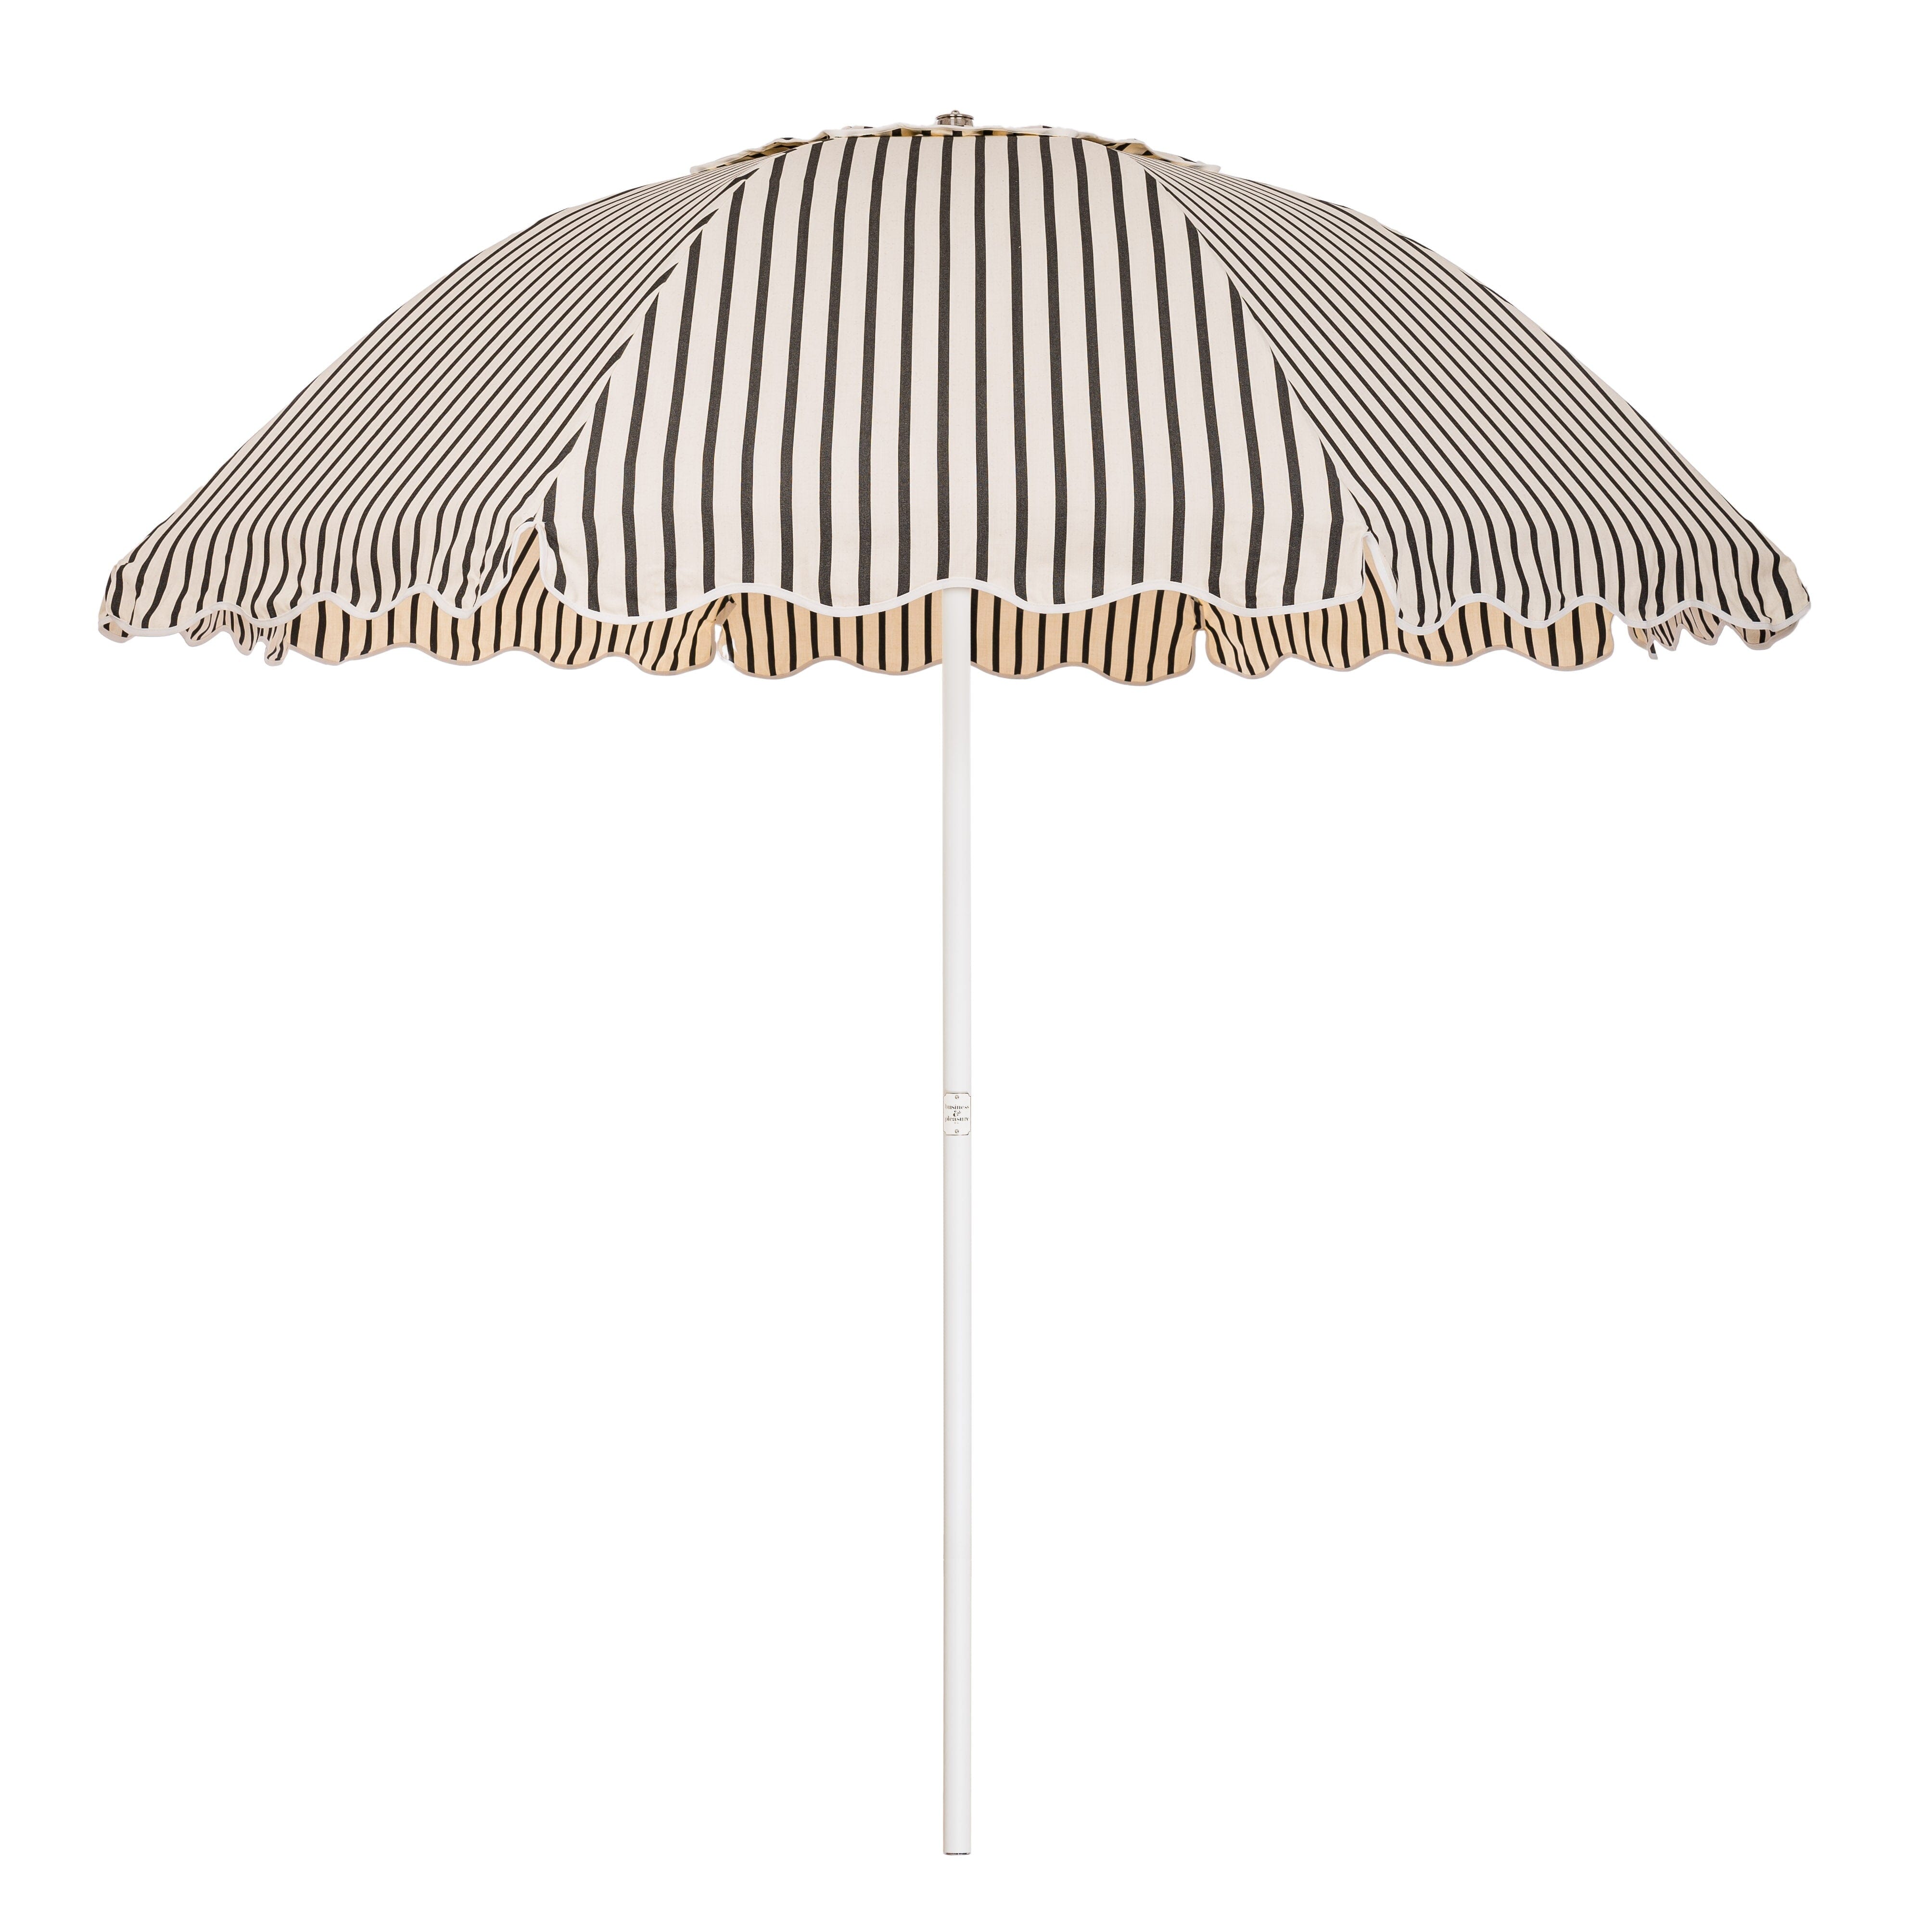 The Patio Umbrella - Monaco Black Stripe Patio Umbrella Business & Pleasure Co Aus 